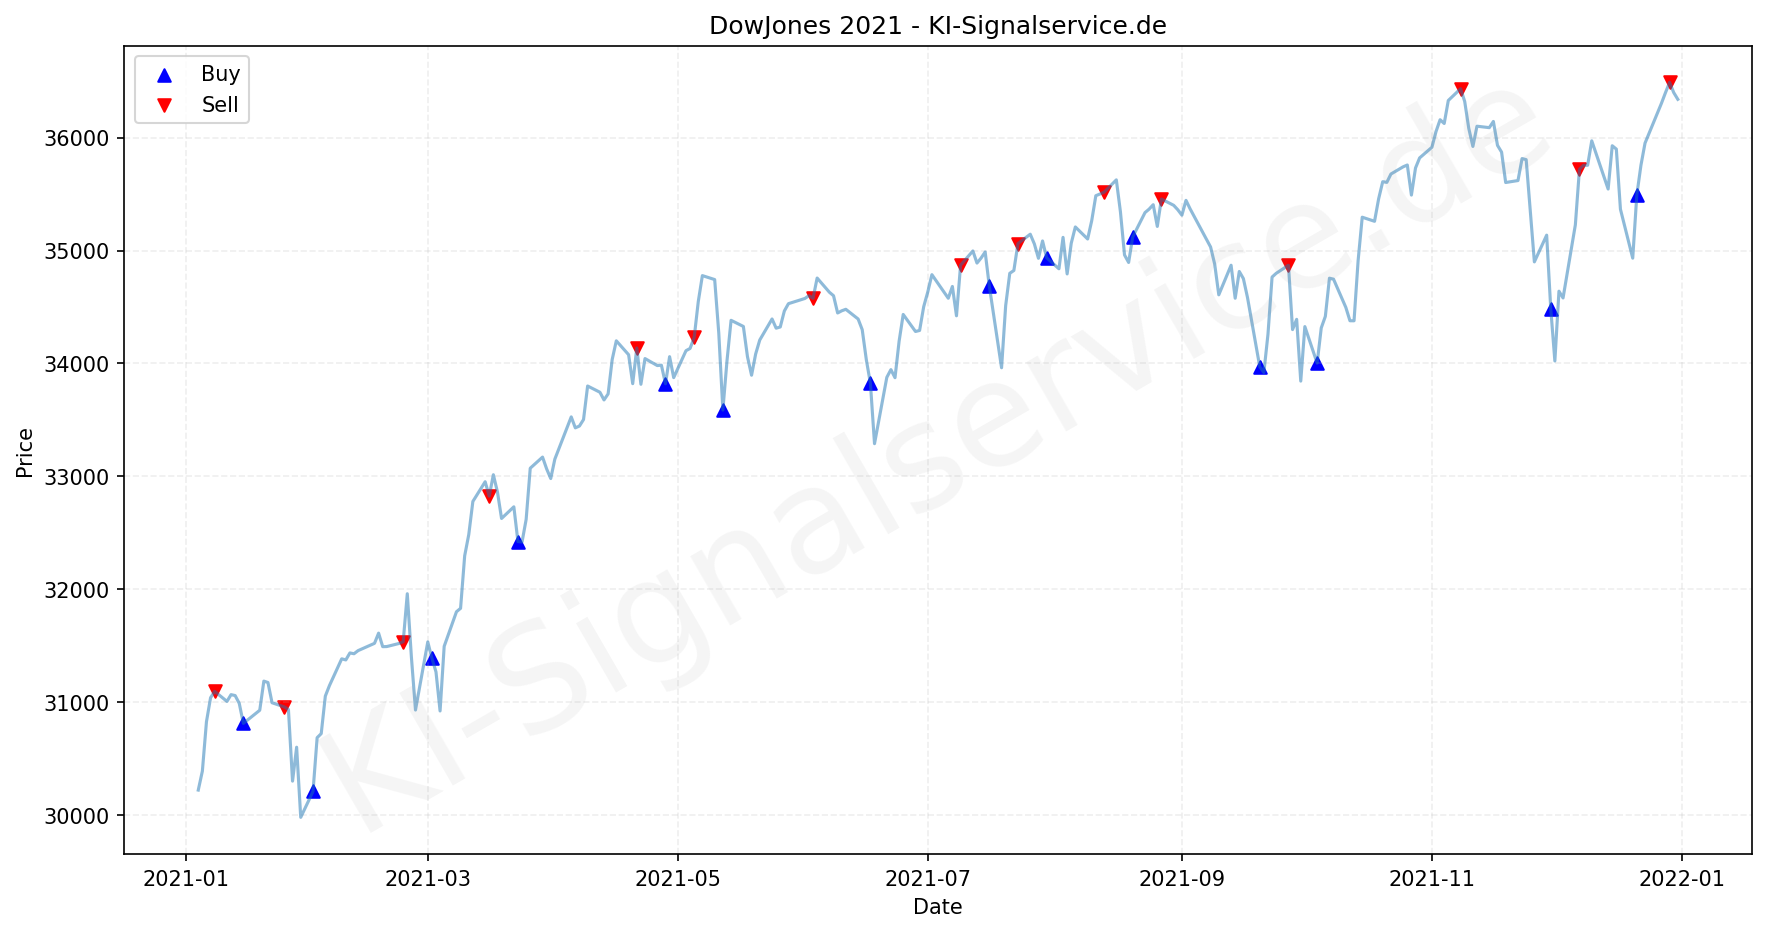 DOWJONES Index Performance Chart - KI Tradingsignale 2021